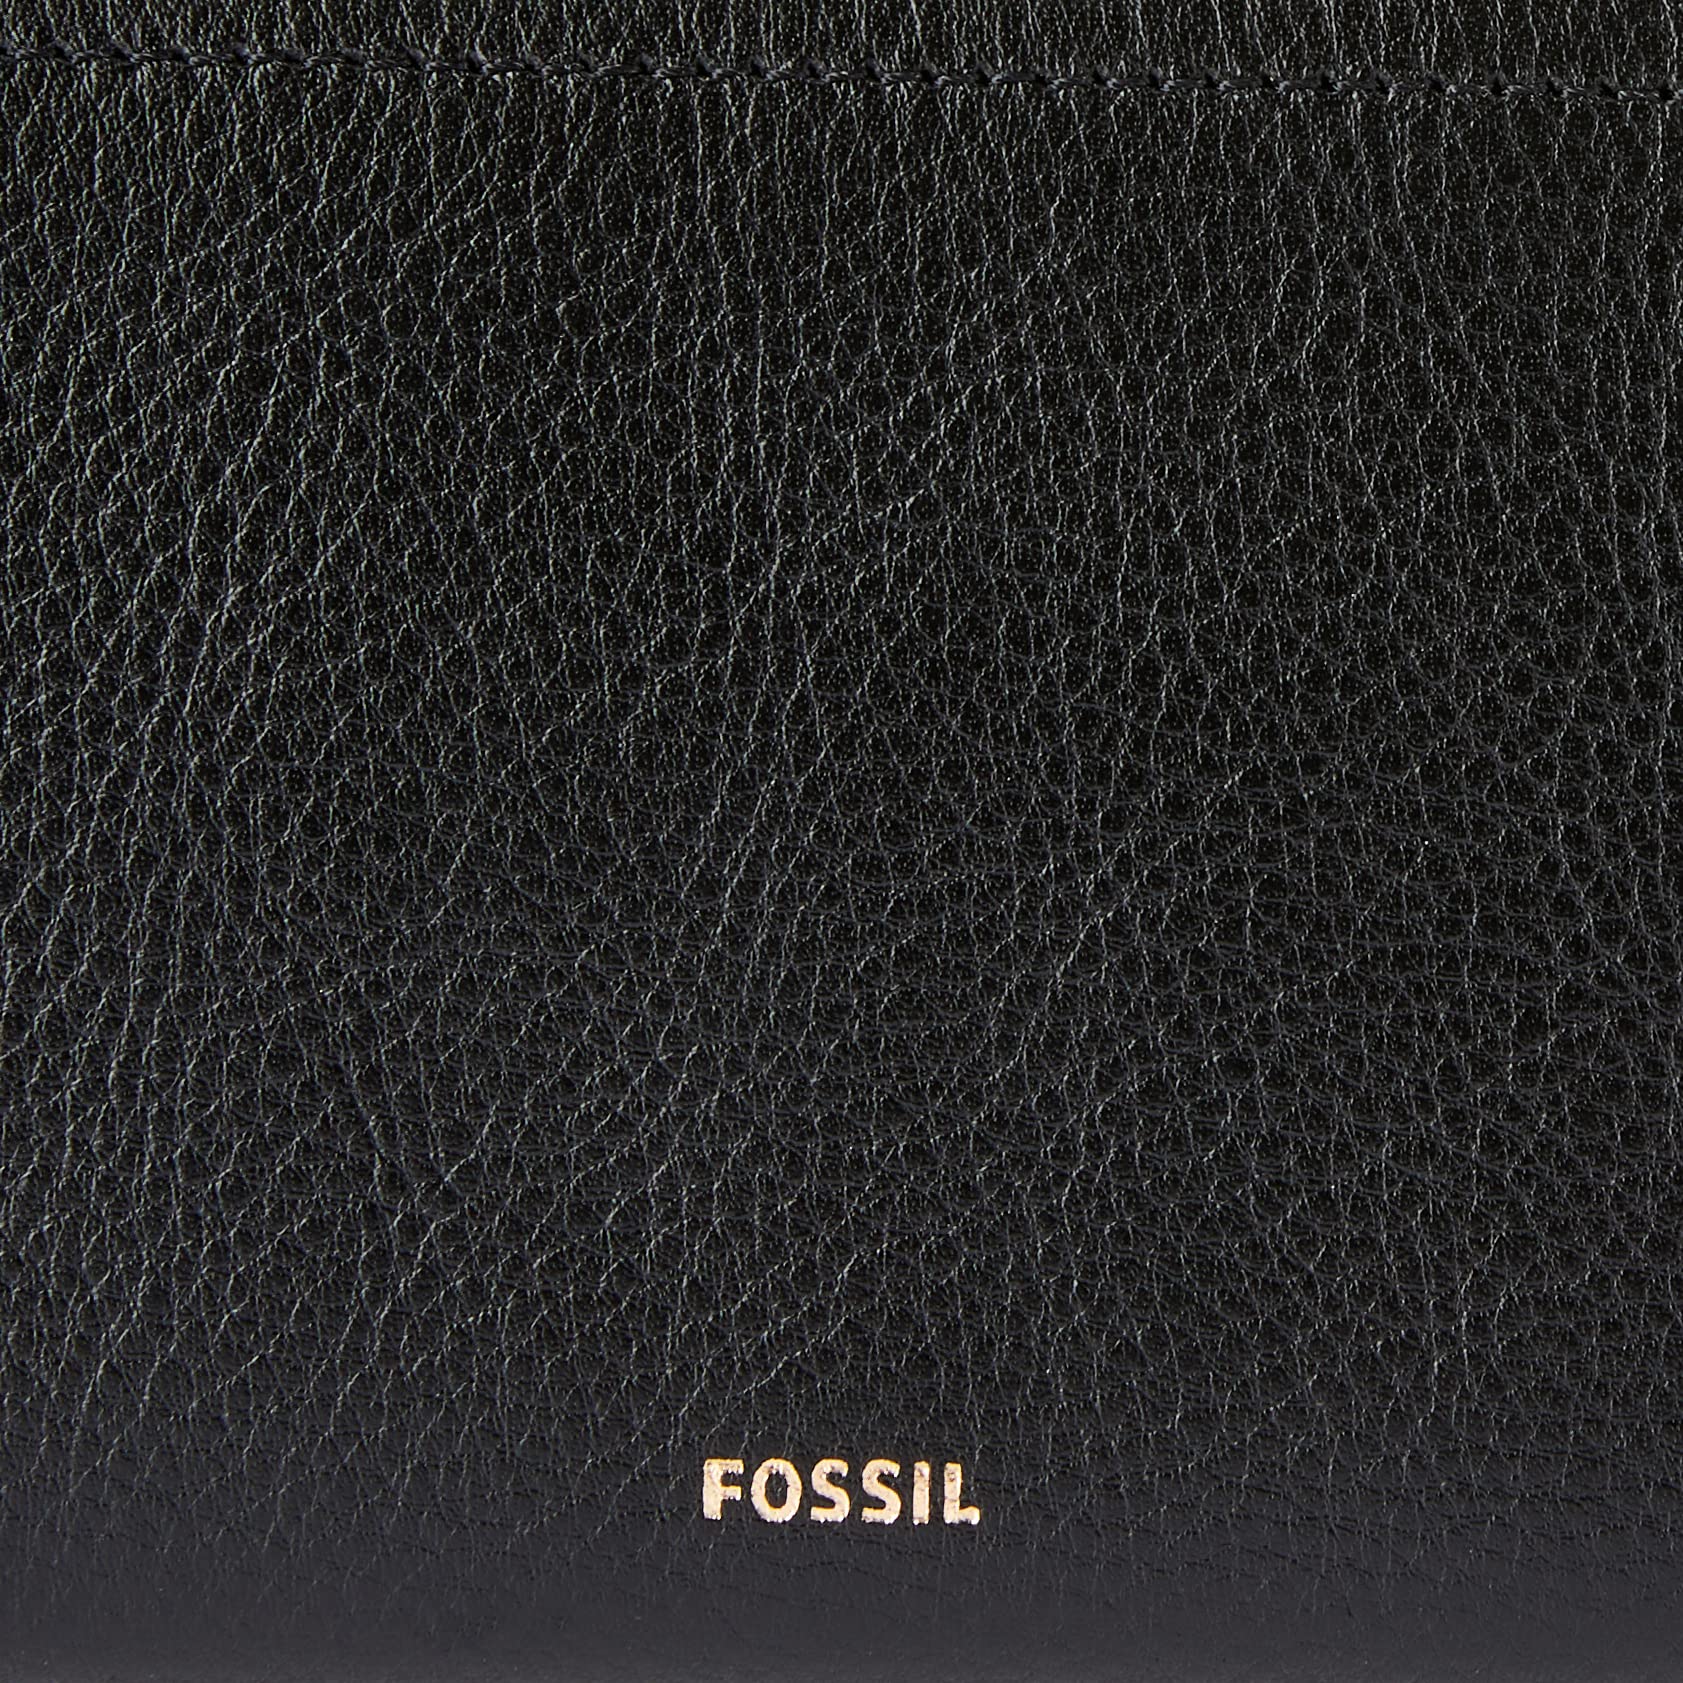 Fossil Women's Logan Leather RFID-Blocking Zip Around Clutch Wallet with Wristlet Strap for Women